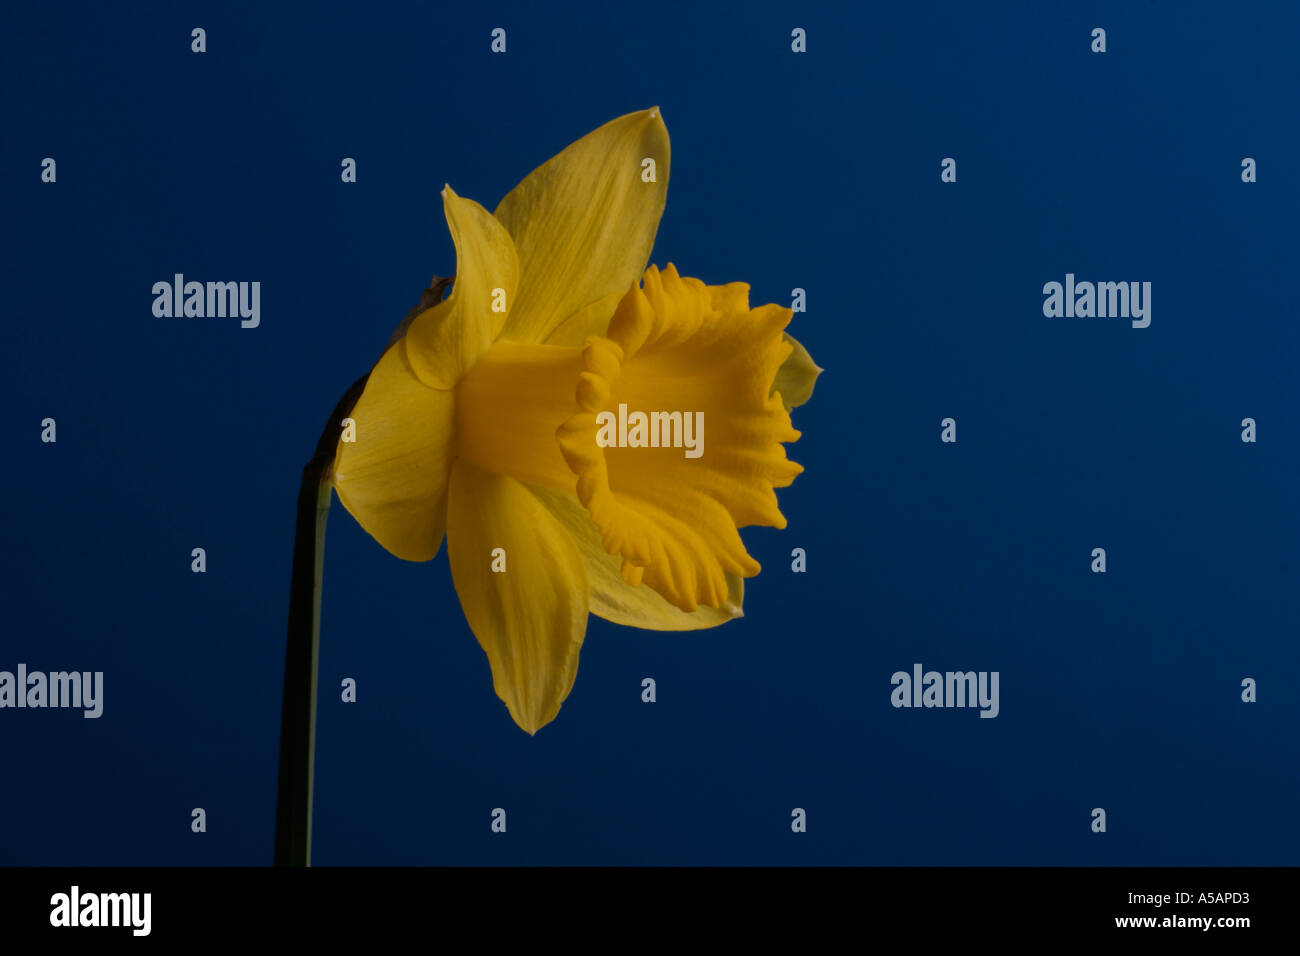 Daffodil national flower of wales symbol icon iconic symbolic Stock Photo